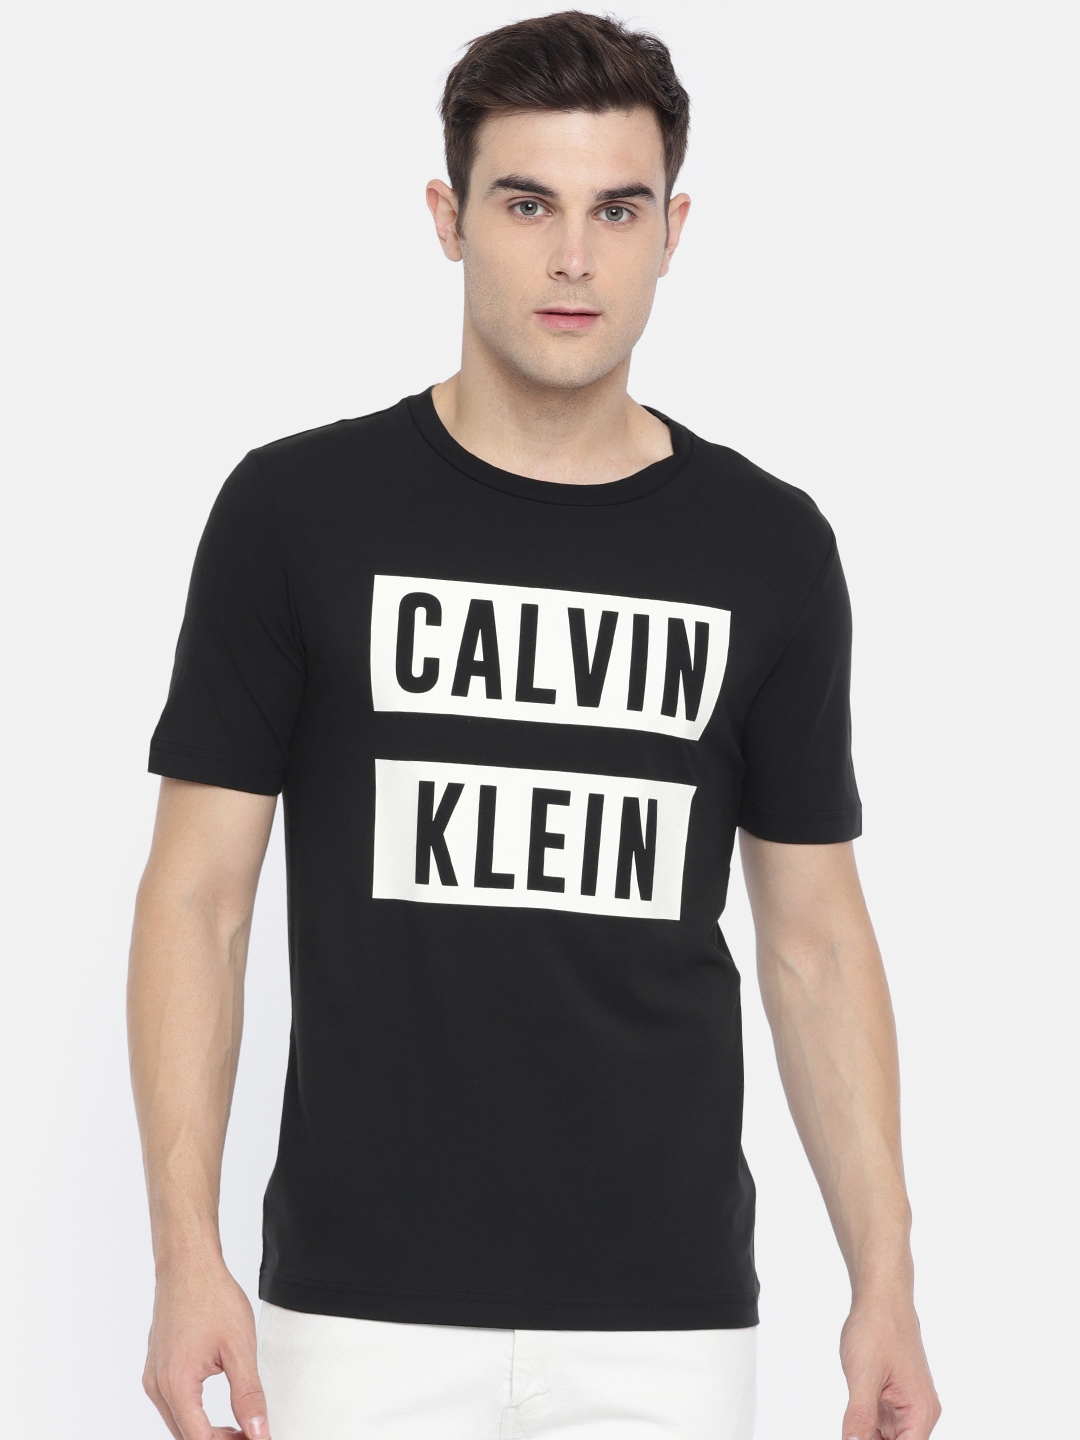 Buy Calvin Klein Jeans Men Black & White Printed Performance Fit Round ...